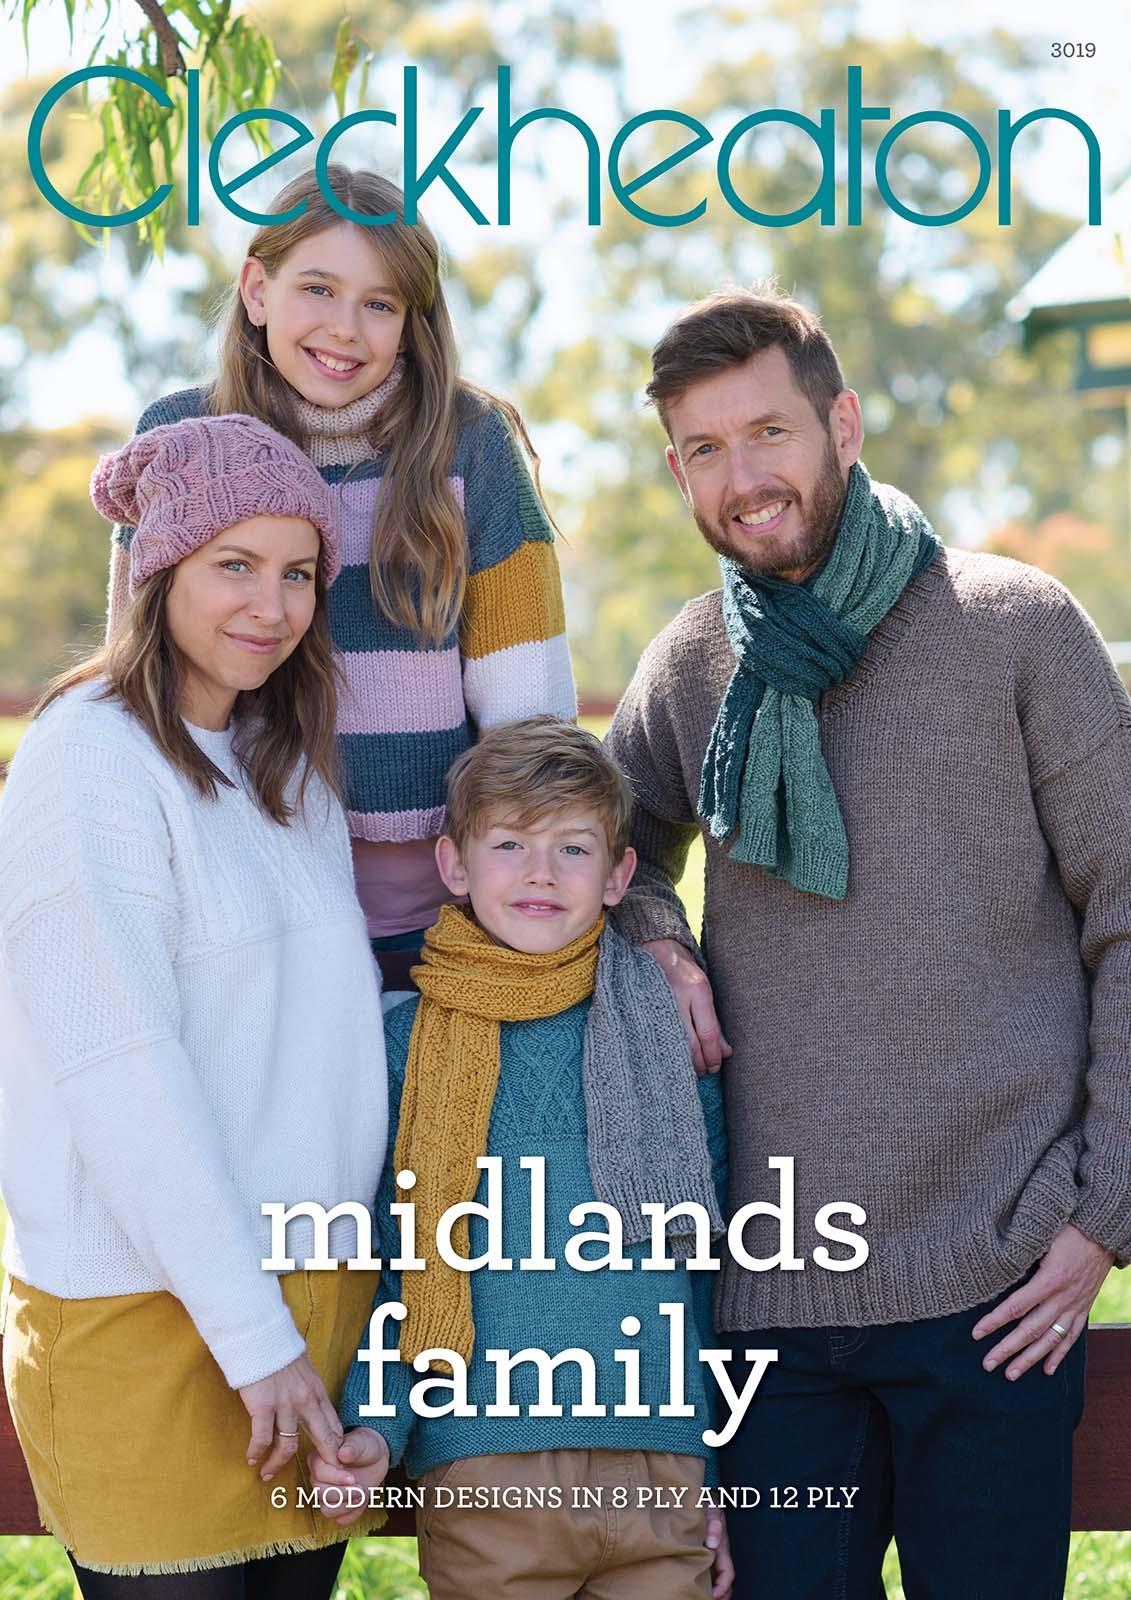 Midlands Family - Cleckheaton 3019